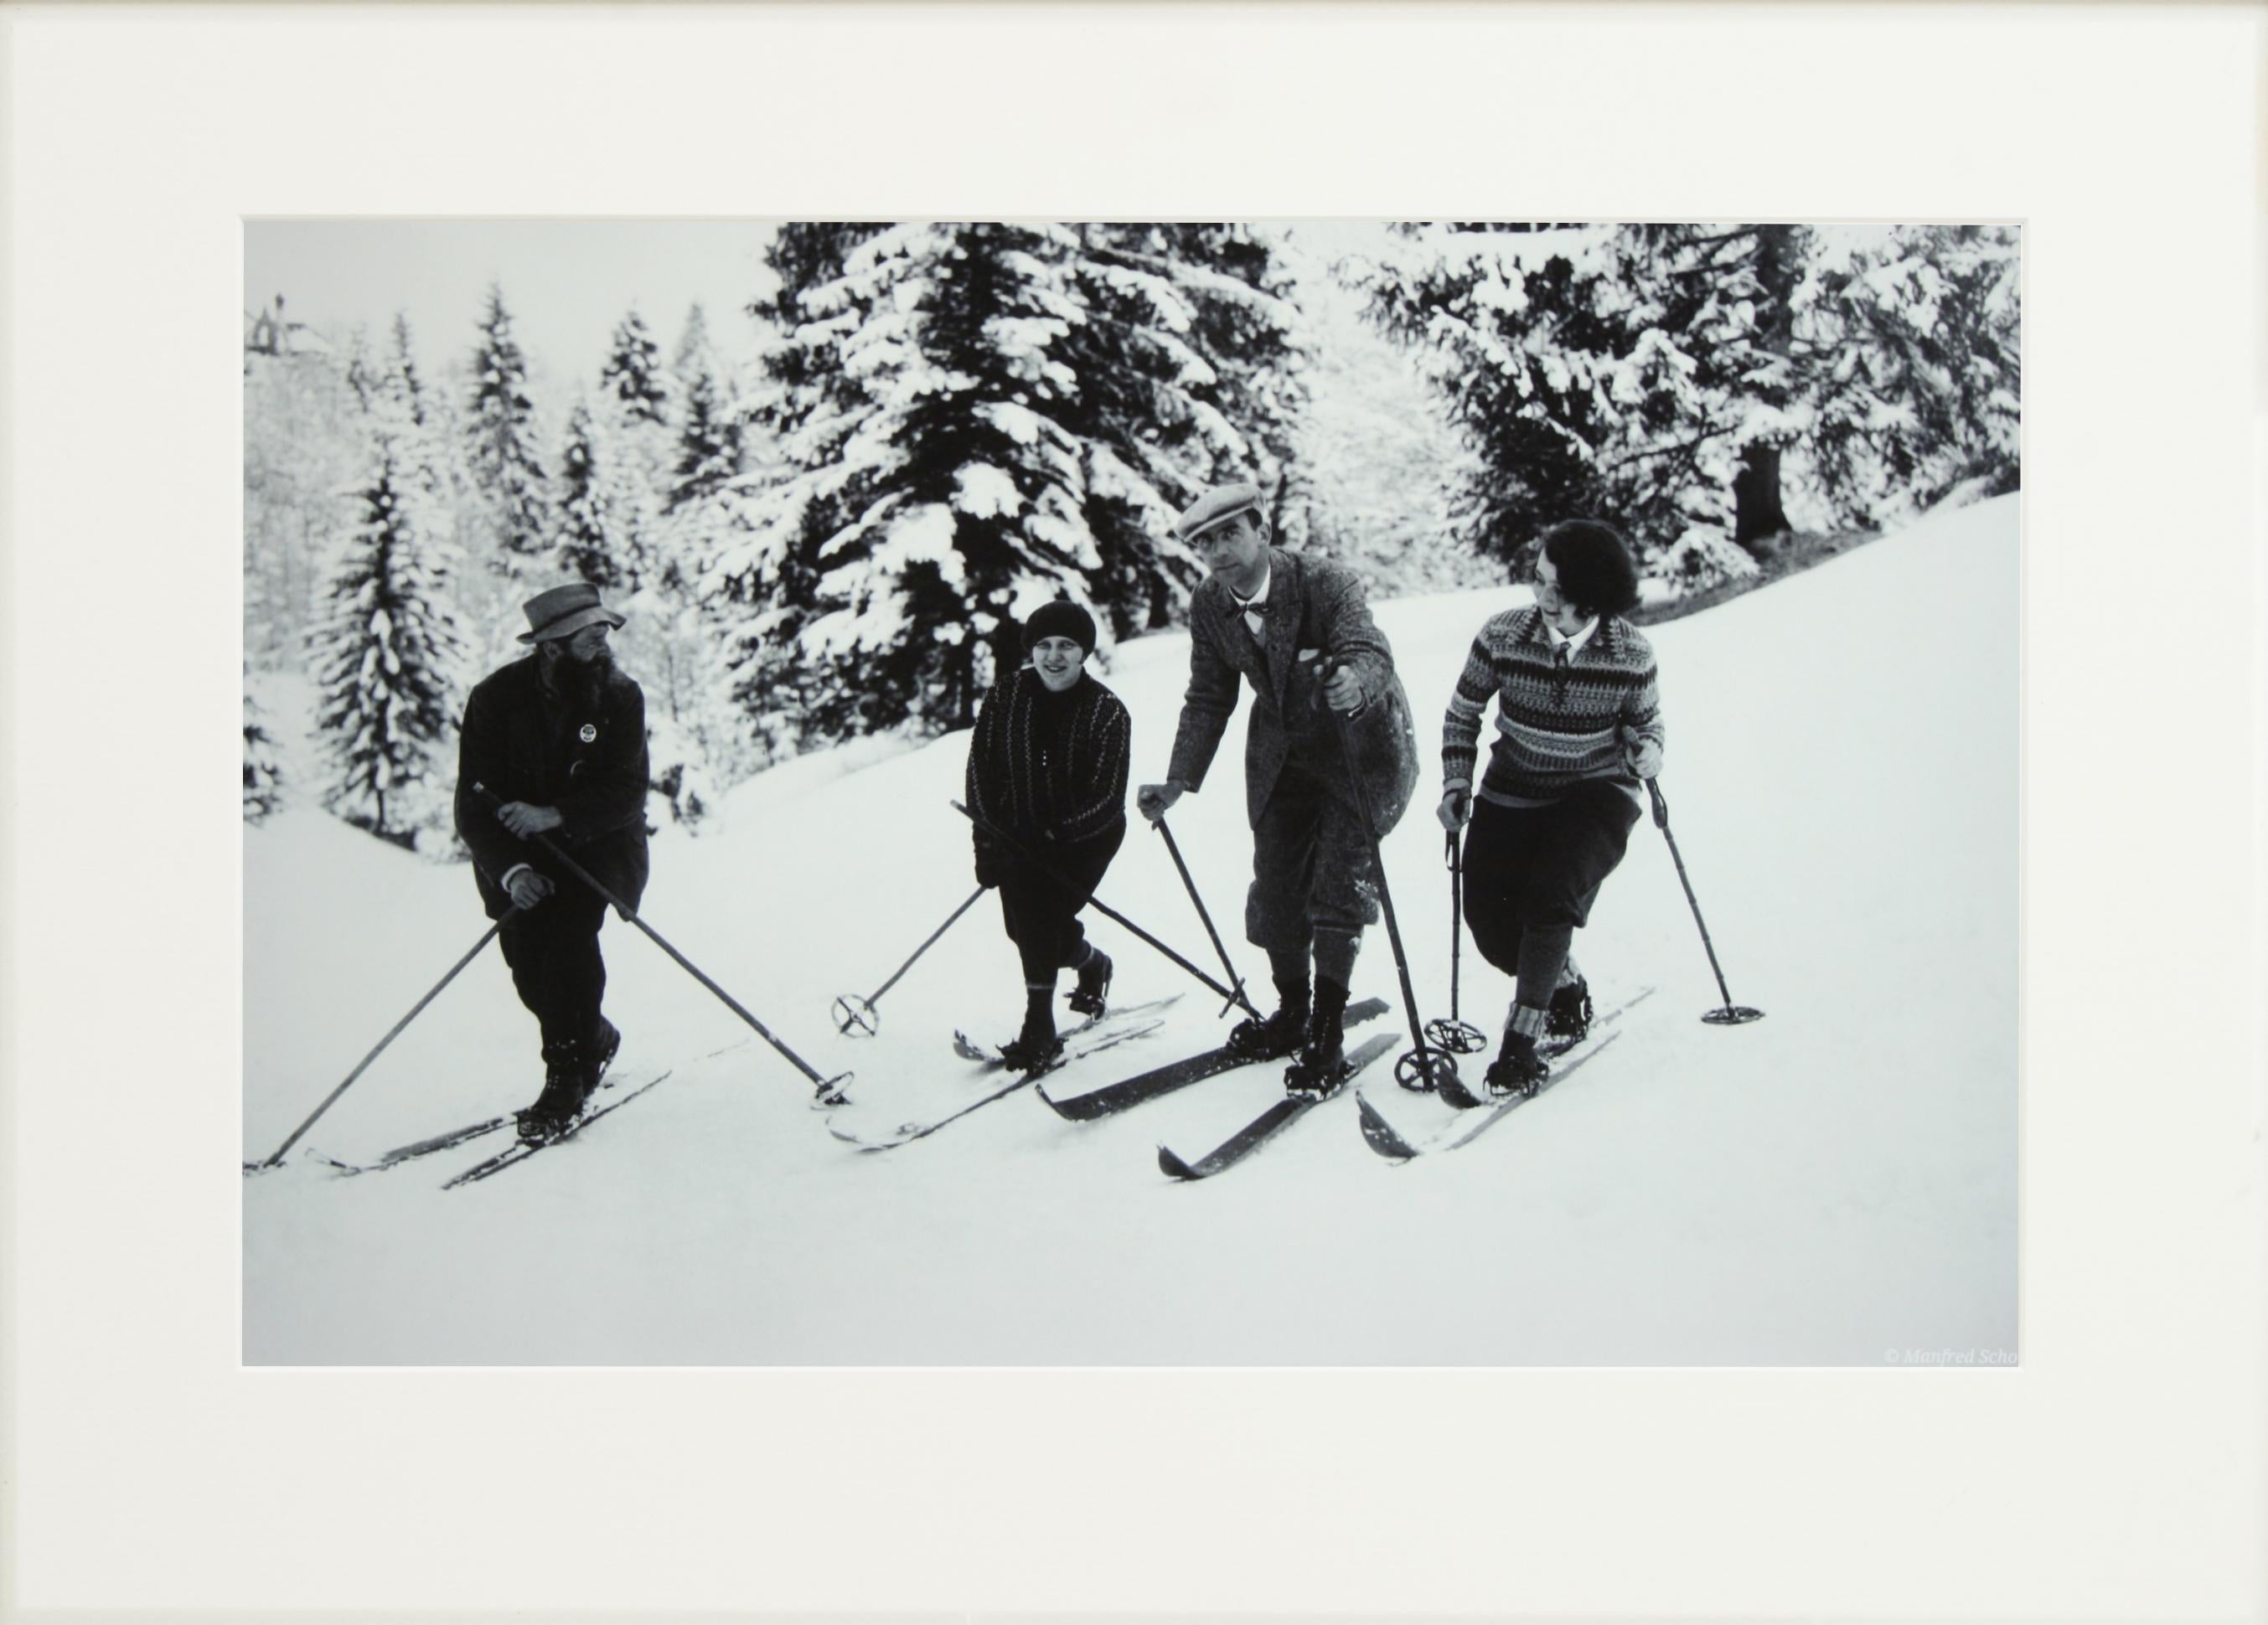 Sporting Art Alpine Ski Photograph, 'Bend Zie Knees', Taken from Original 1930s Photograp For Sale